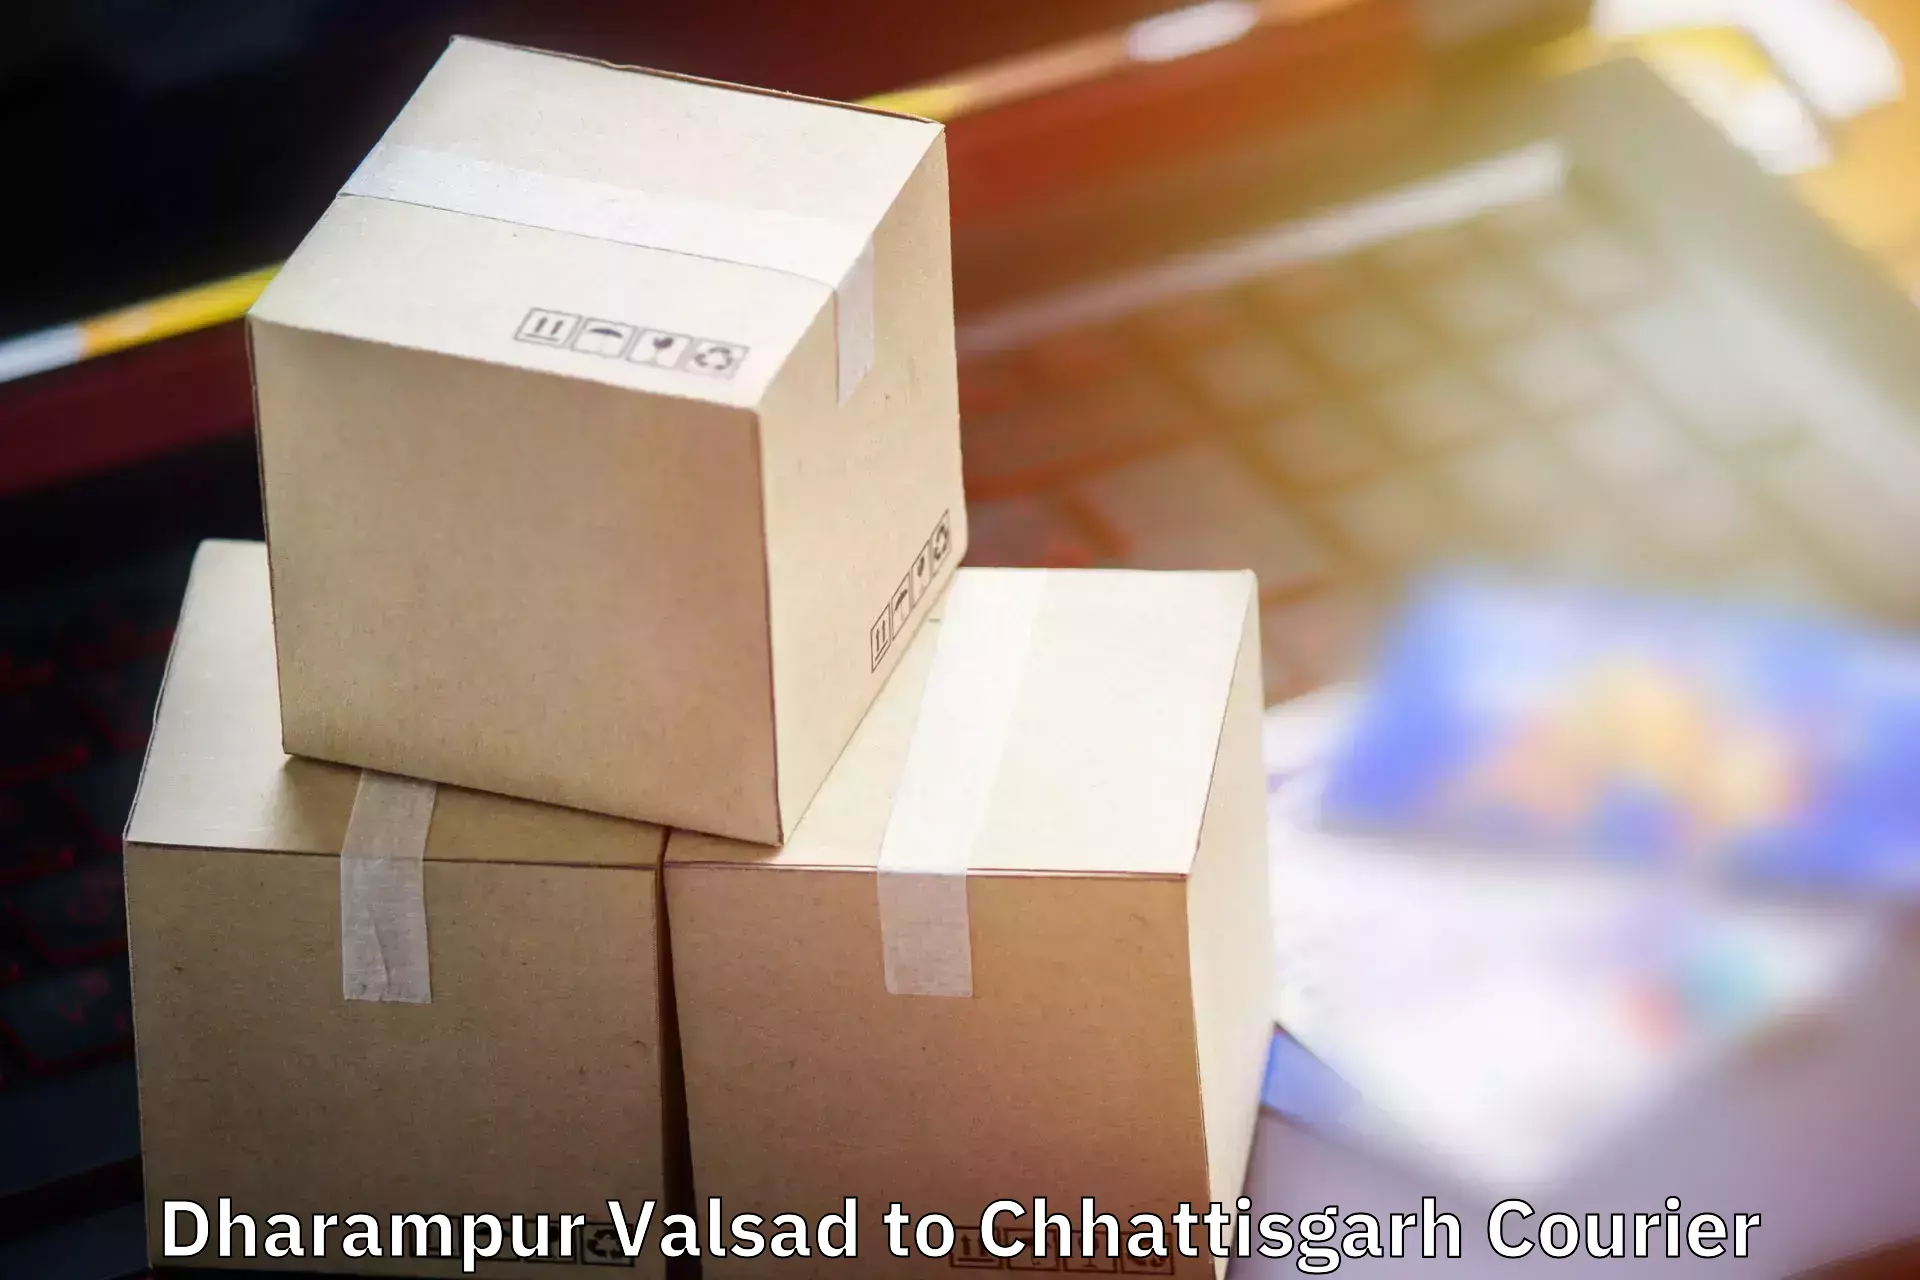 Baggage transport professionals Dharampur Valsad to Chhattisgarh